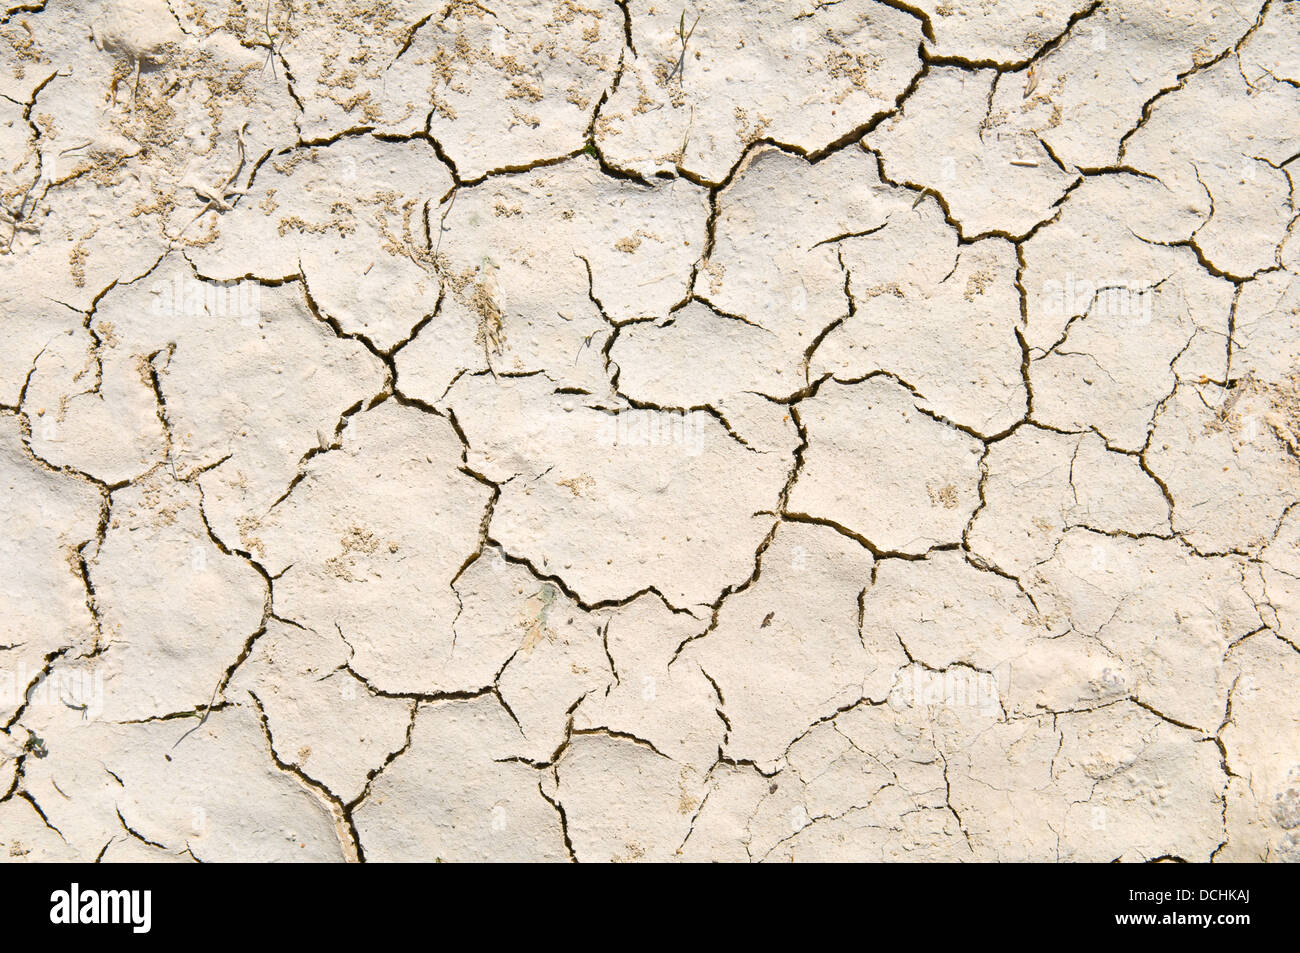 drought ground texture Stock Photo